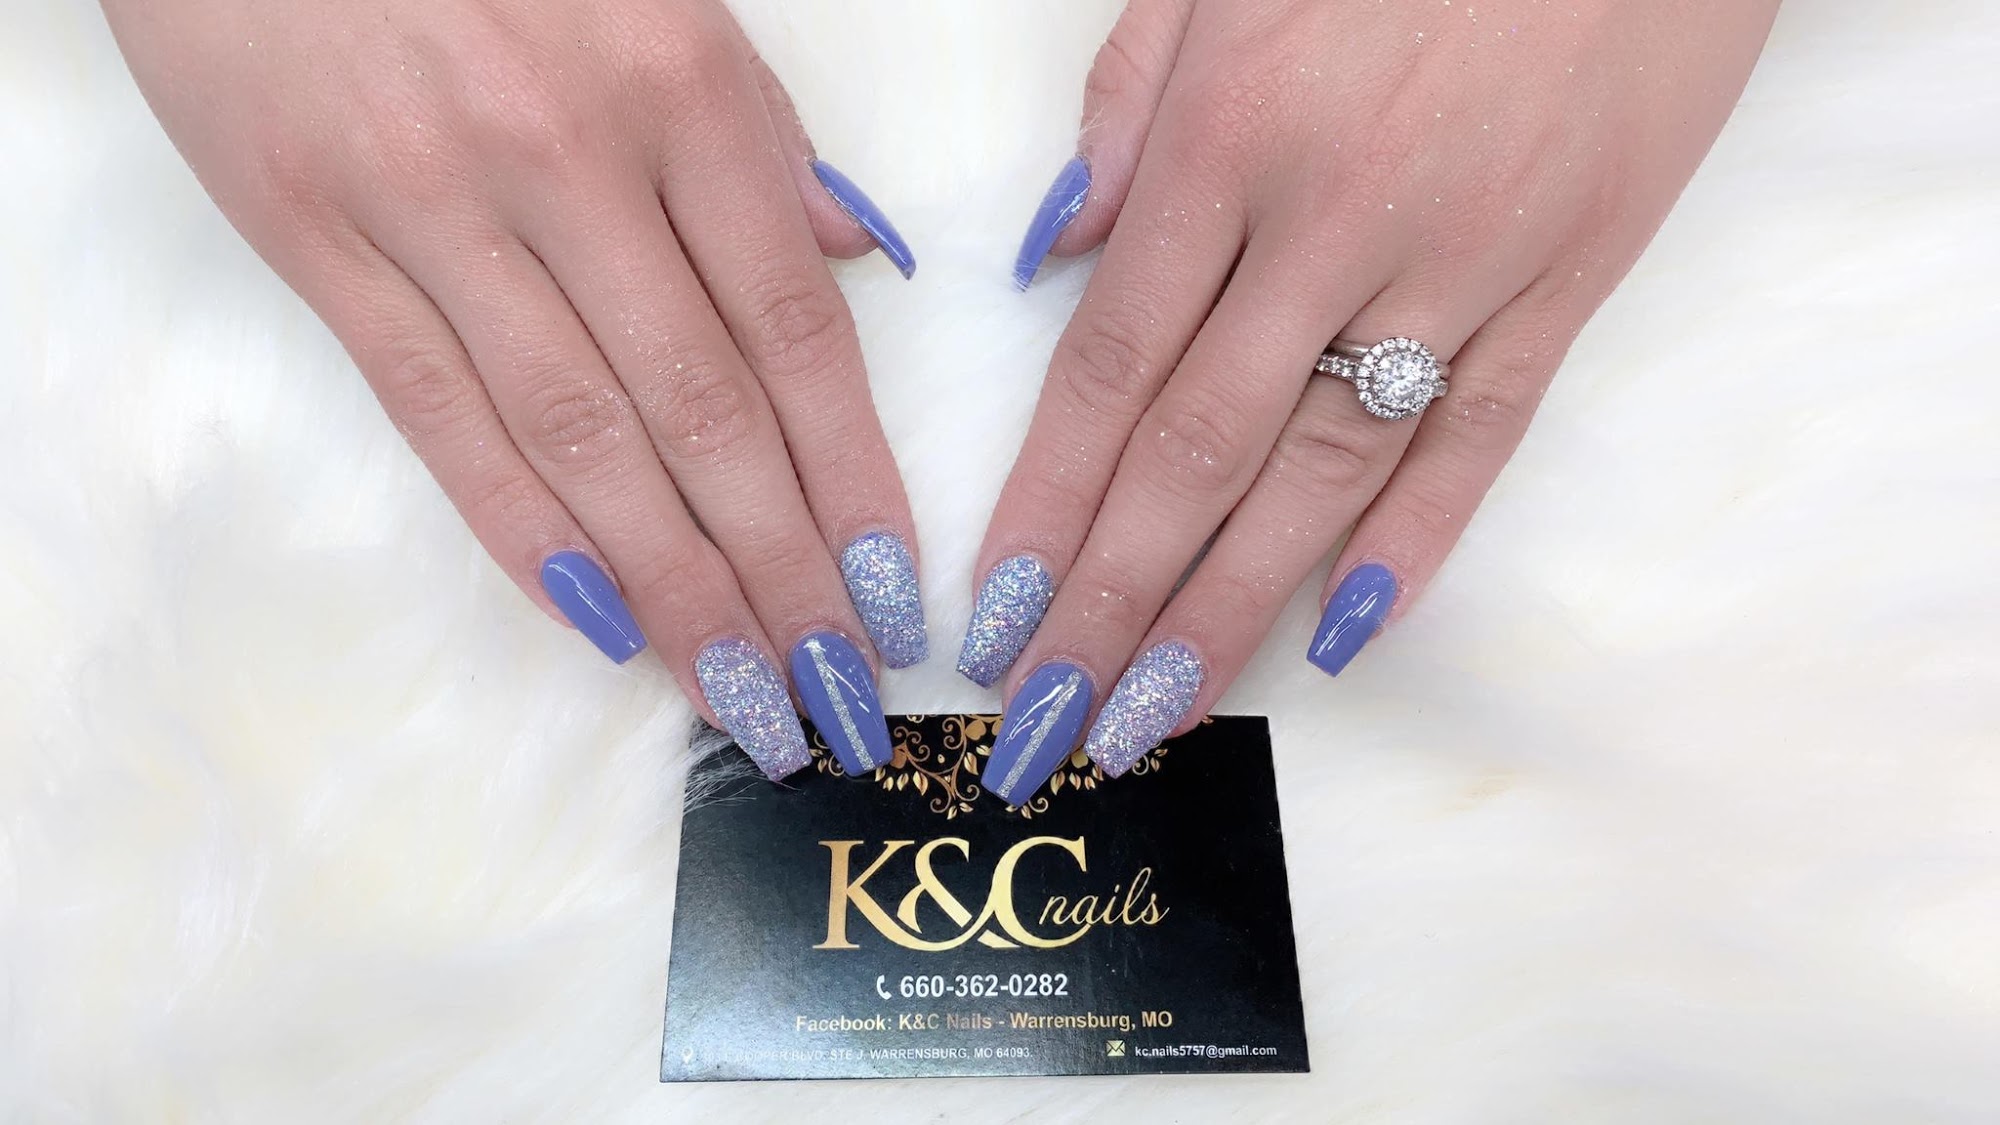 K&C nails